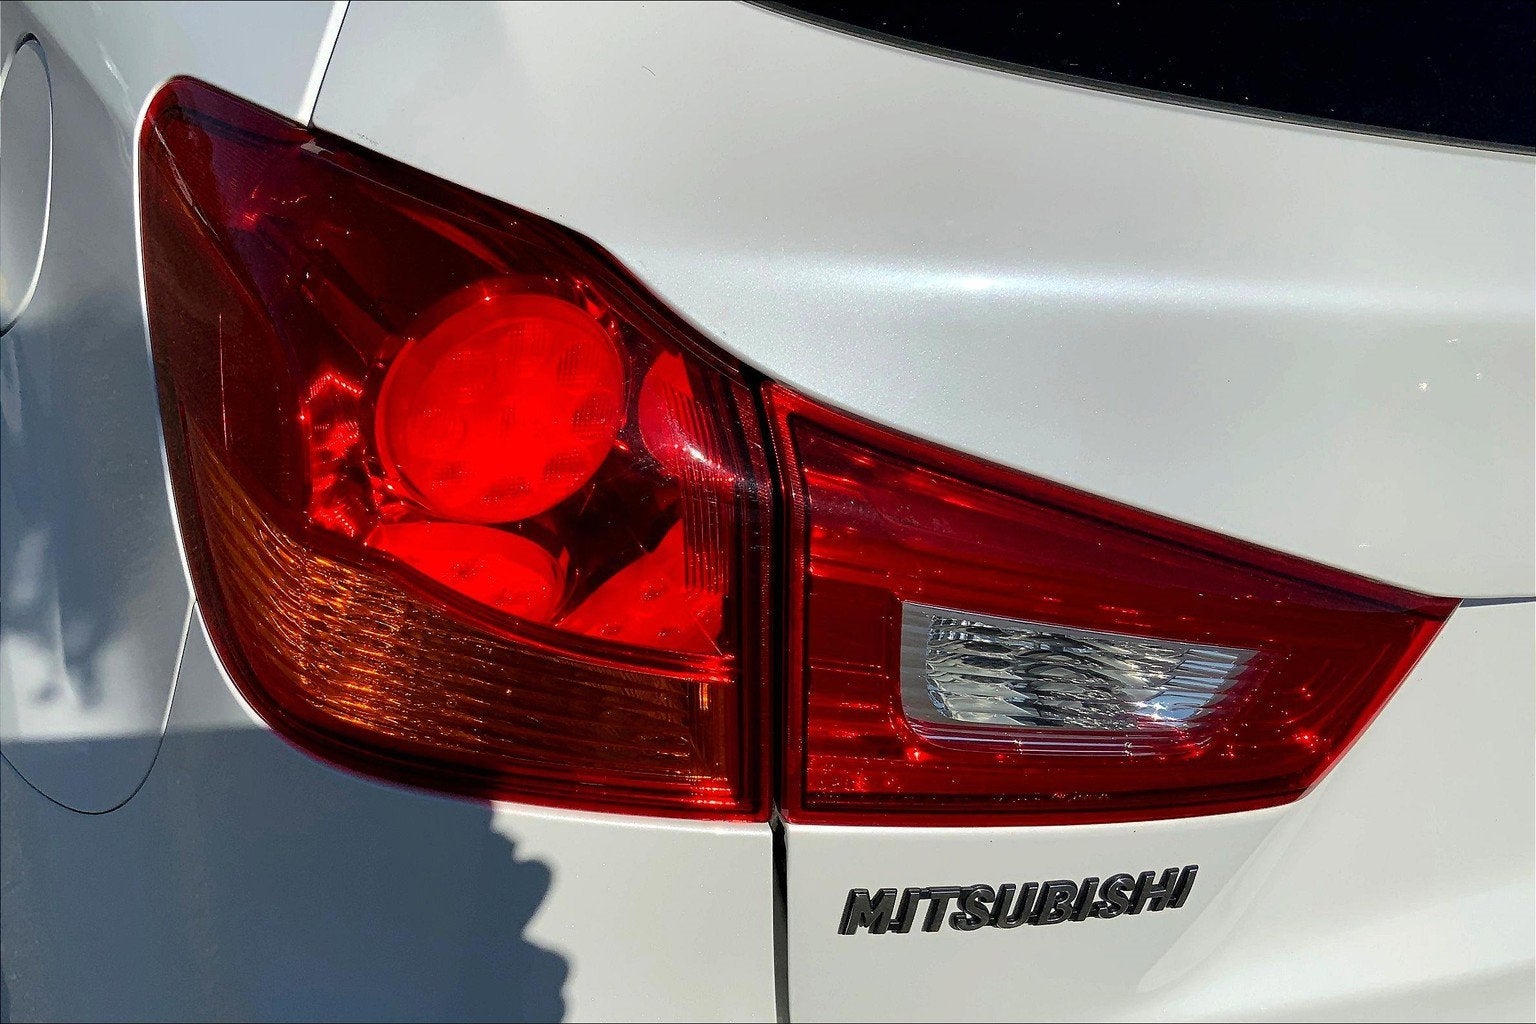 2017 Mitsubishi Outlander Sport ES